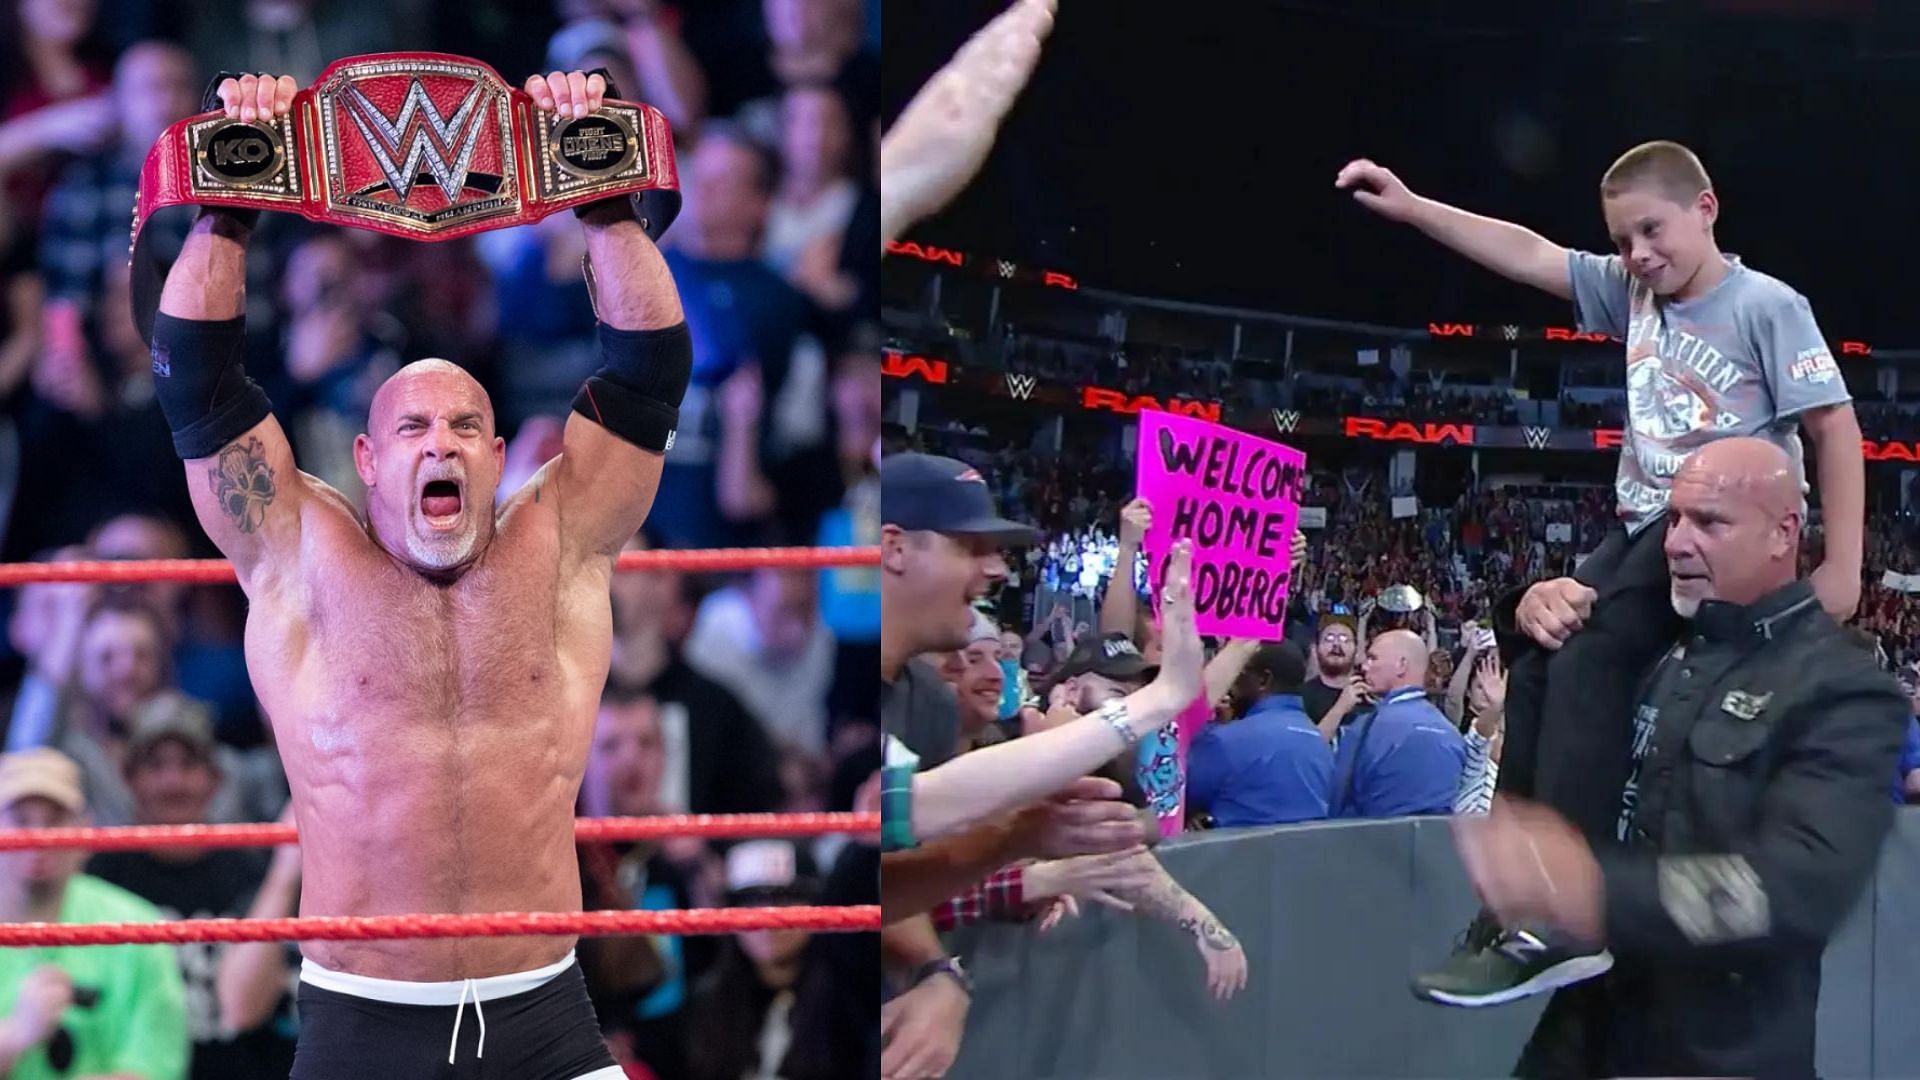 Goldberg is a former WWE Universal Champion